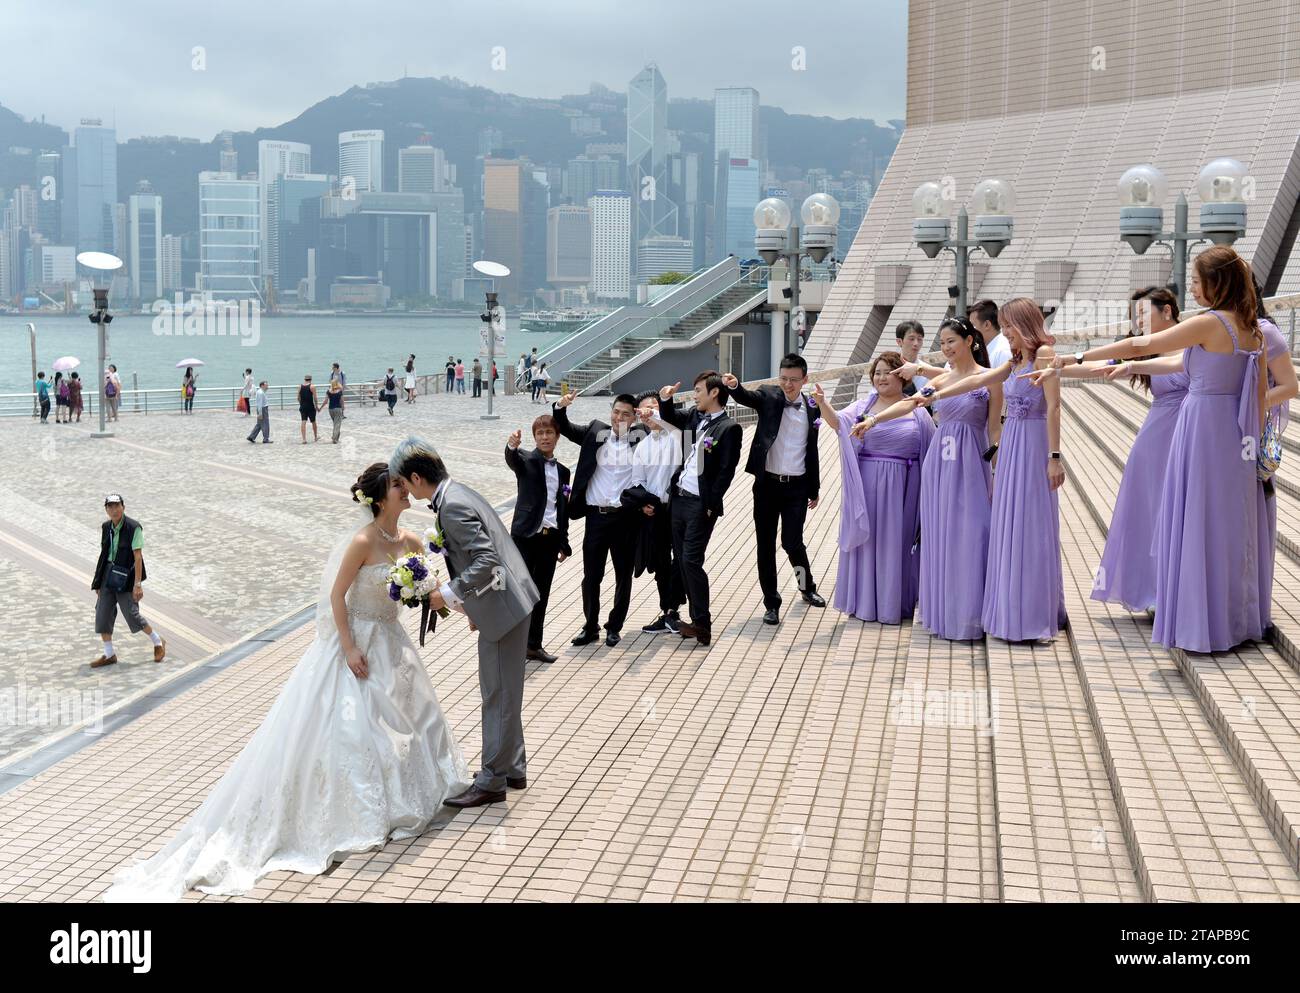 HONGKONG - 25. April 2016: Hochzeitspaar mit Brautjungfer und Freundschaft auf der berühmten Gasse in Kowloon, Hongkong. Stockfoto